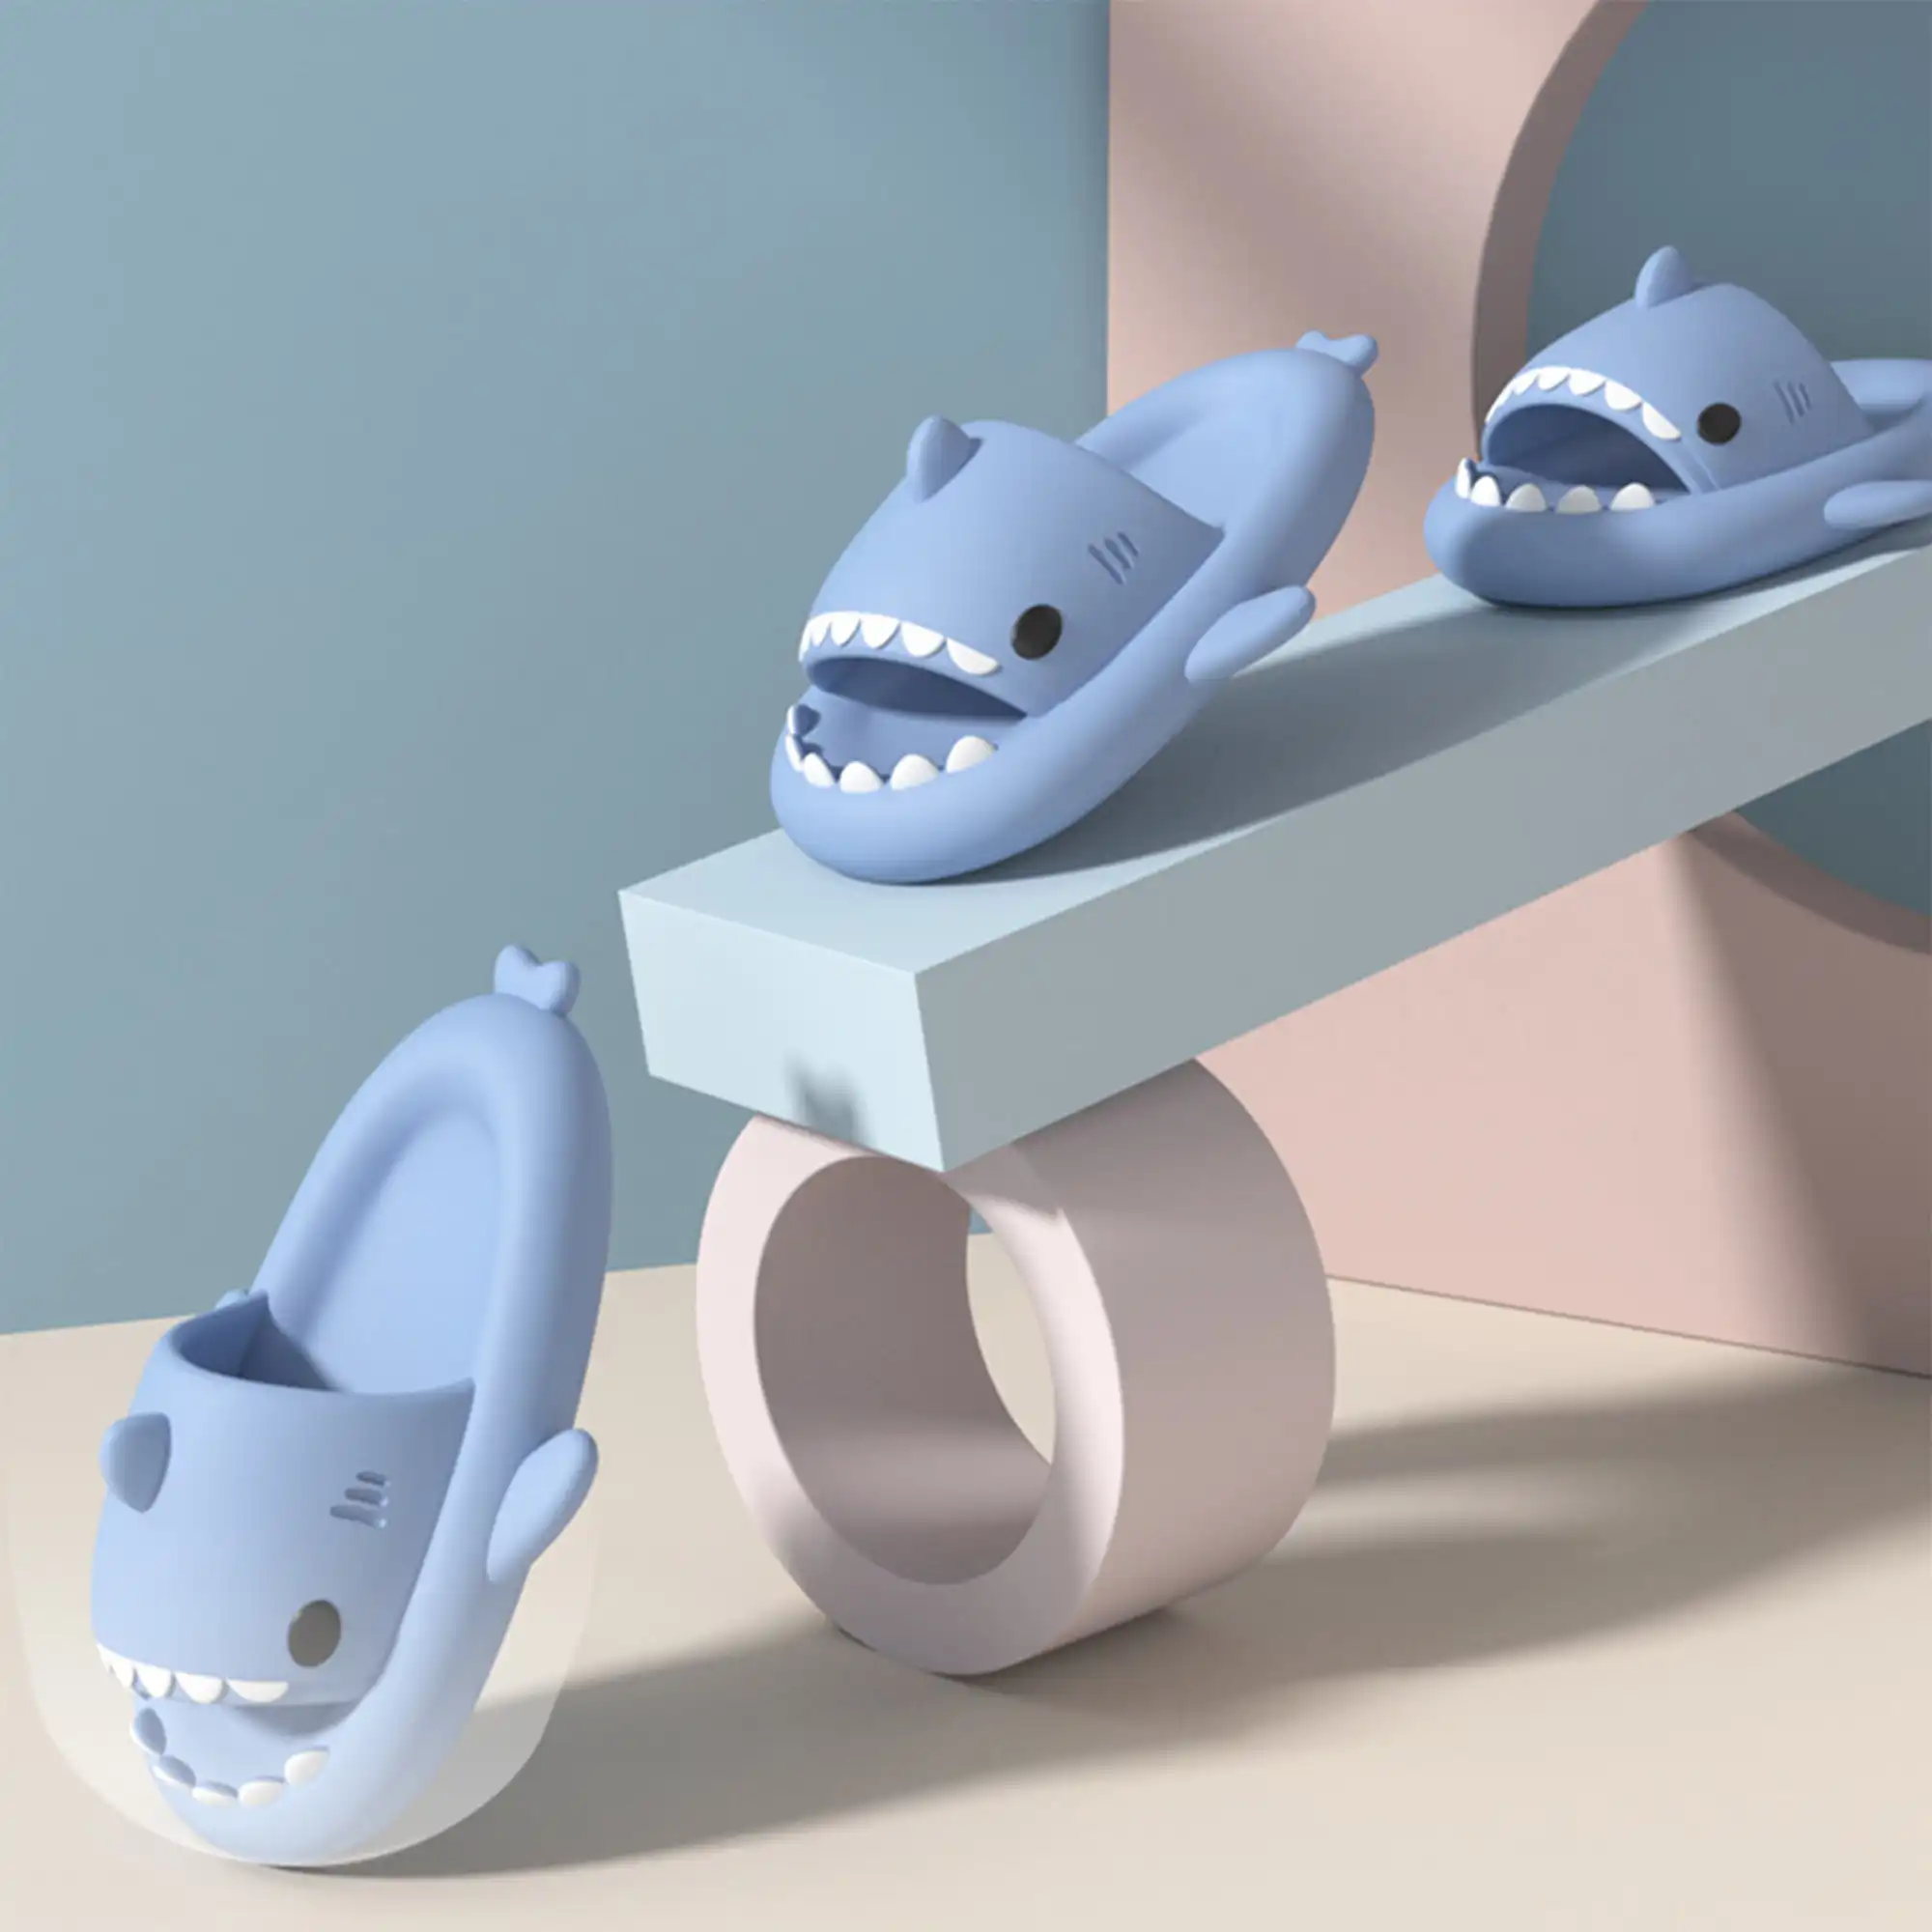 Haze blue Original Shark Slides for Kids